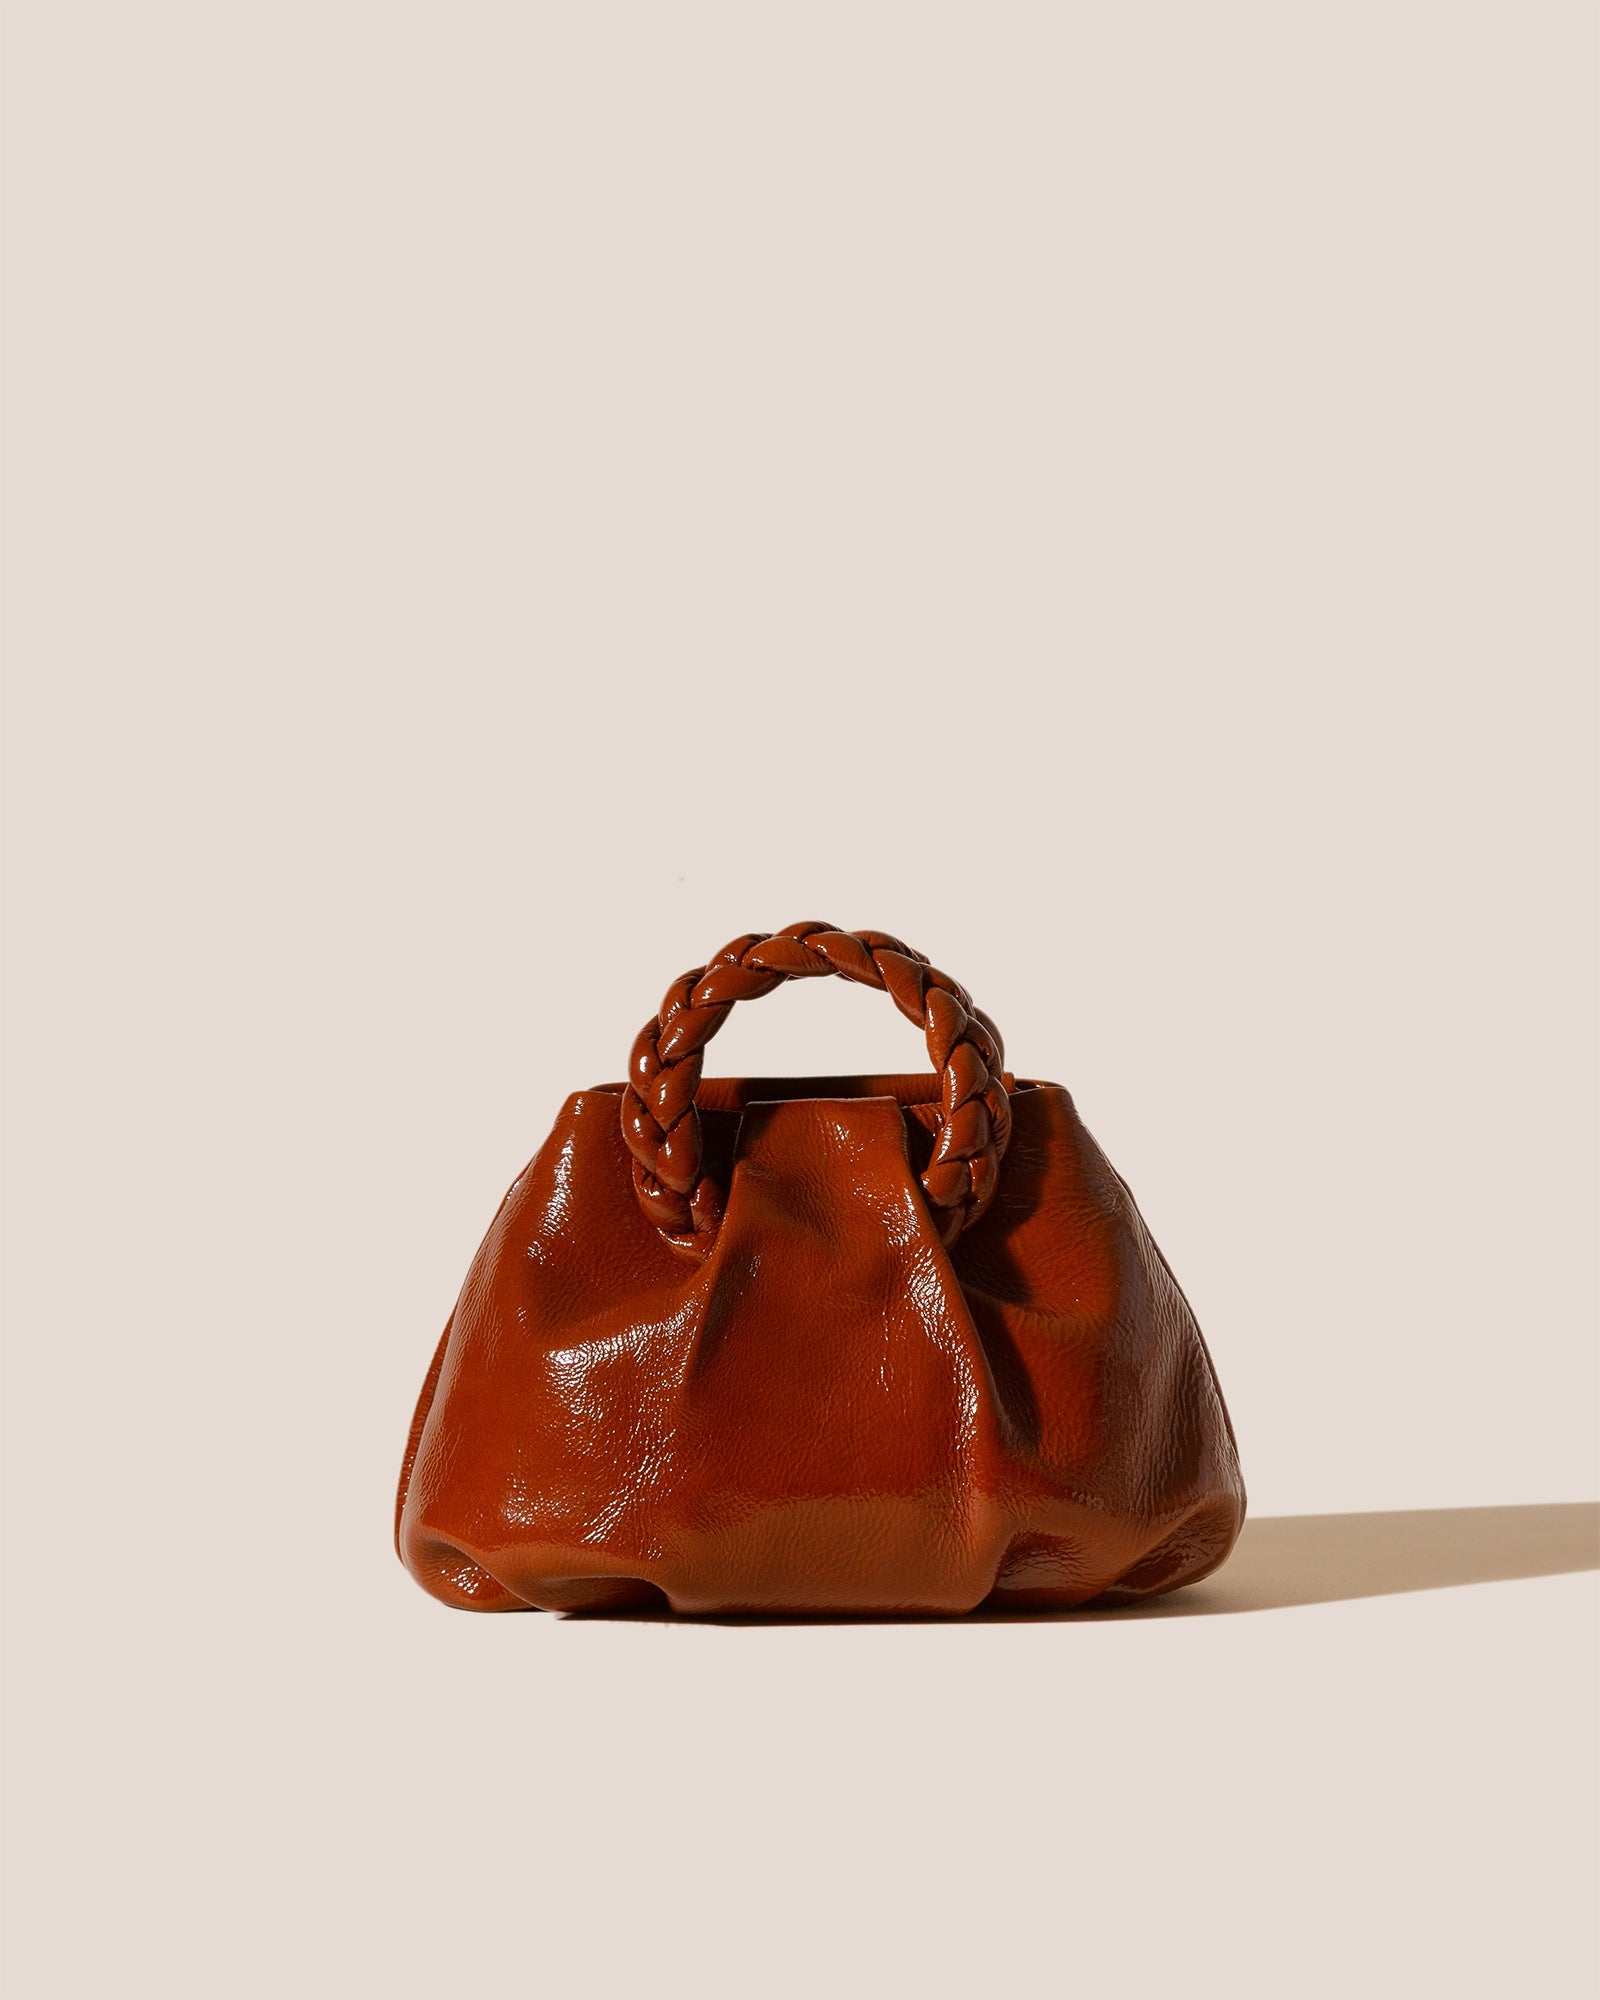 Bombon braided handle leather handbag by Hereu